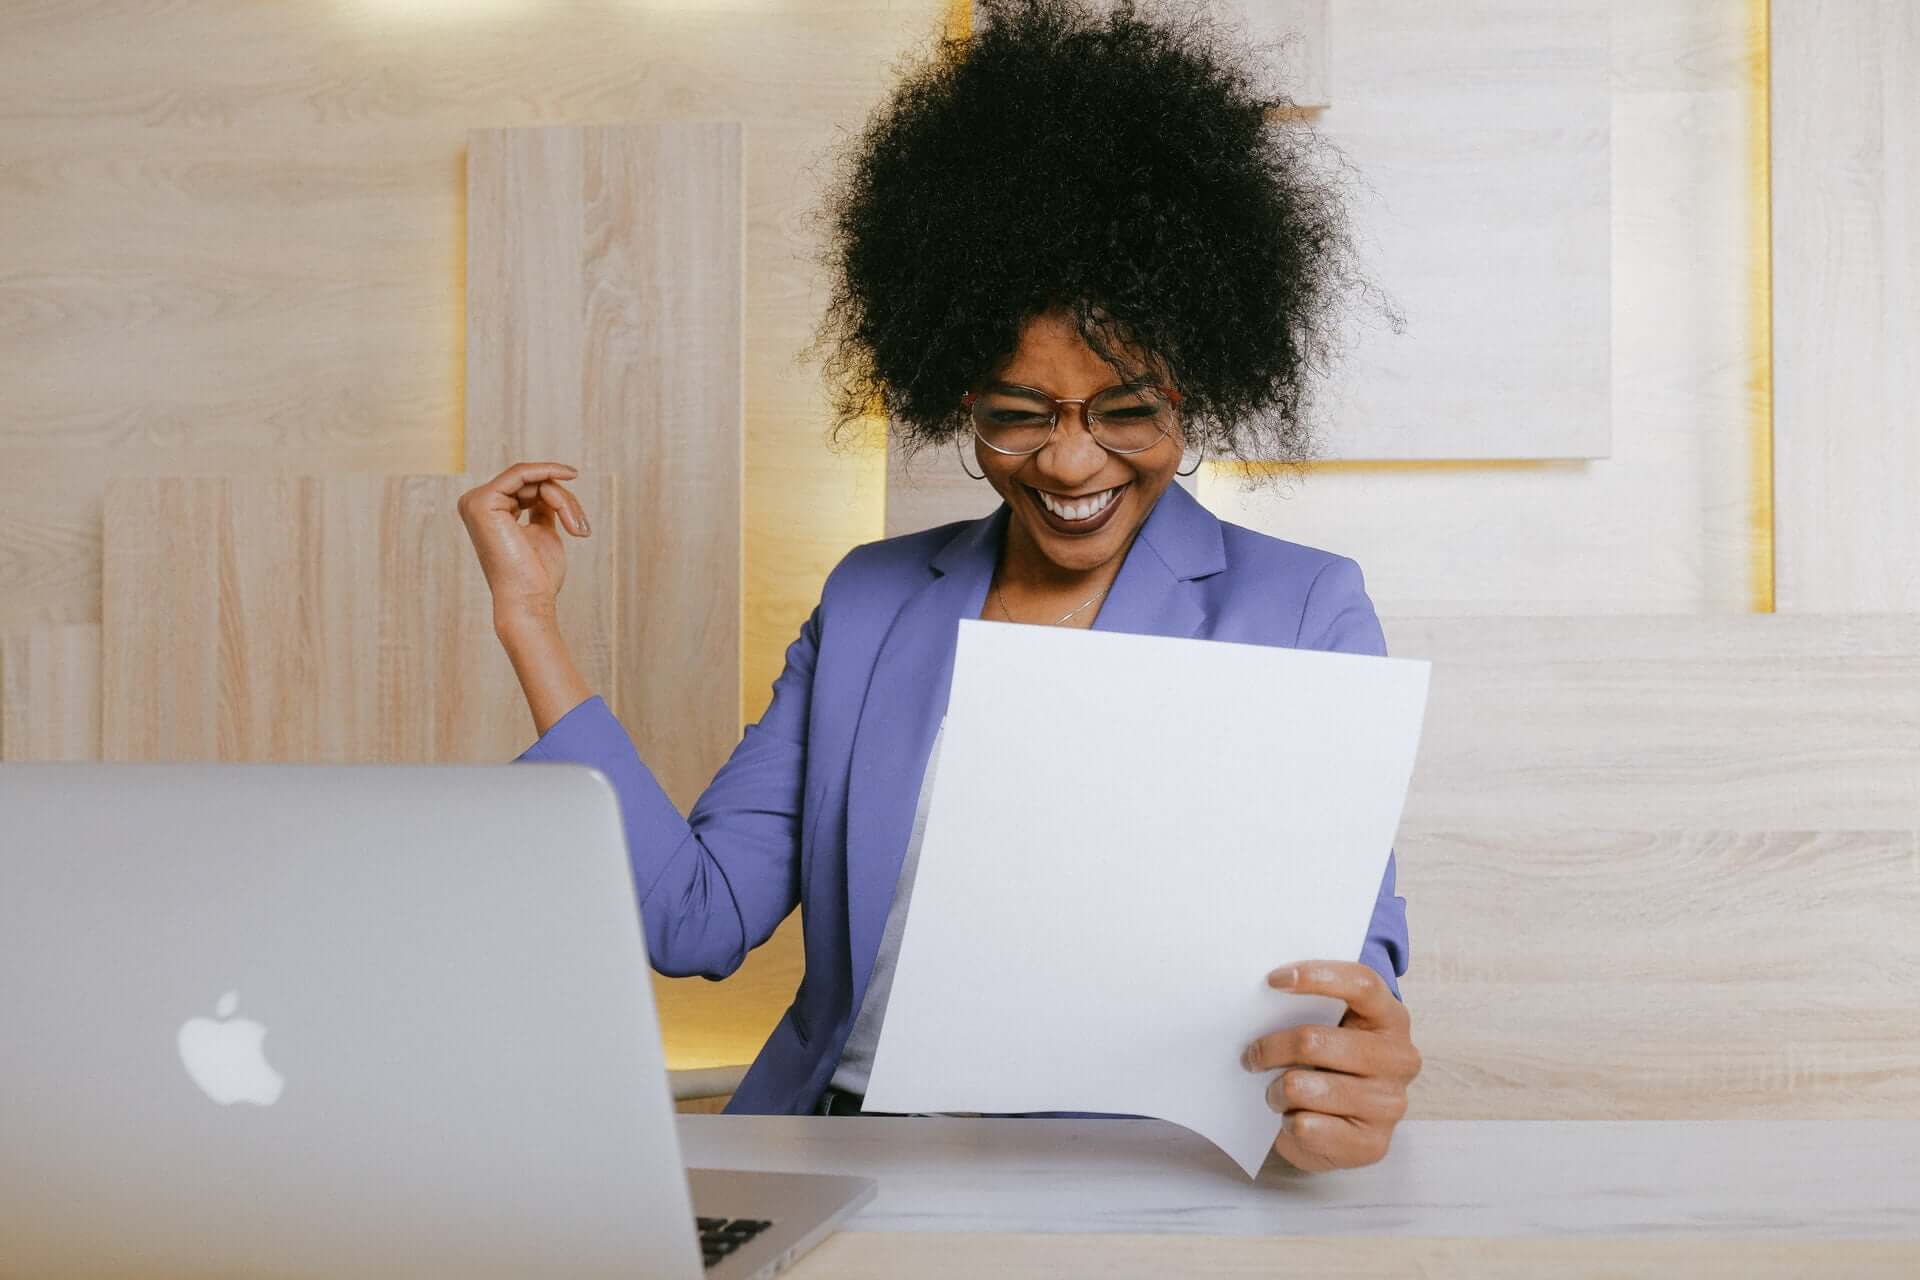 5 Simple CV Hacks for Getting the Job